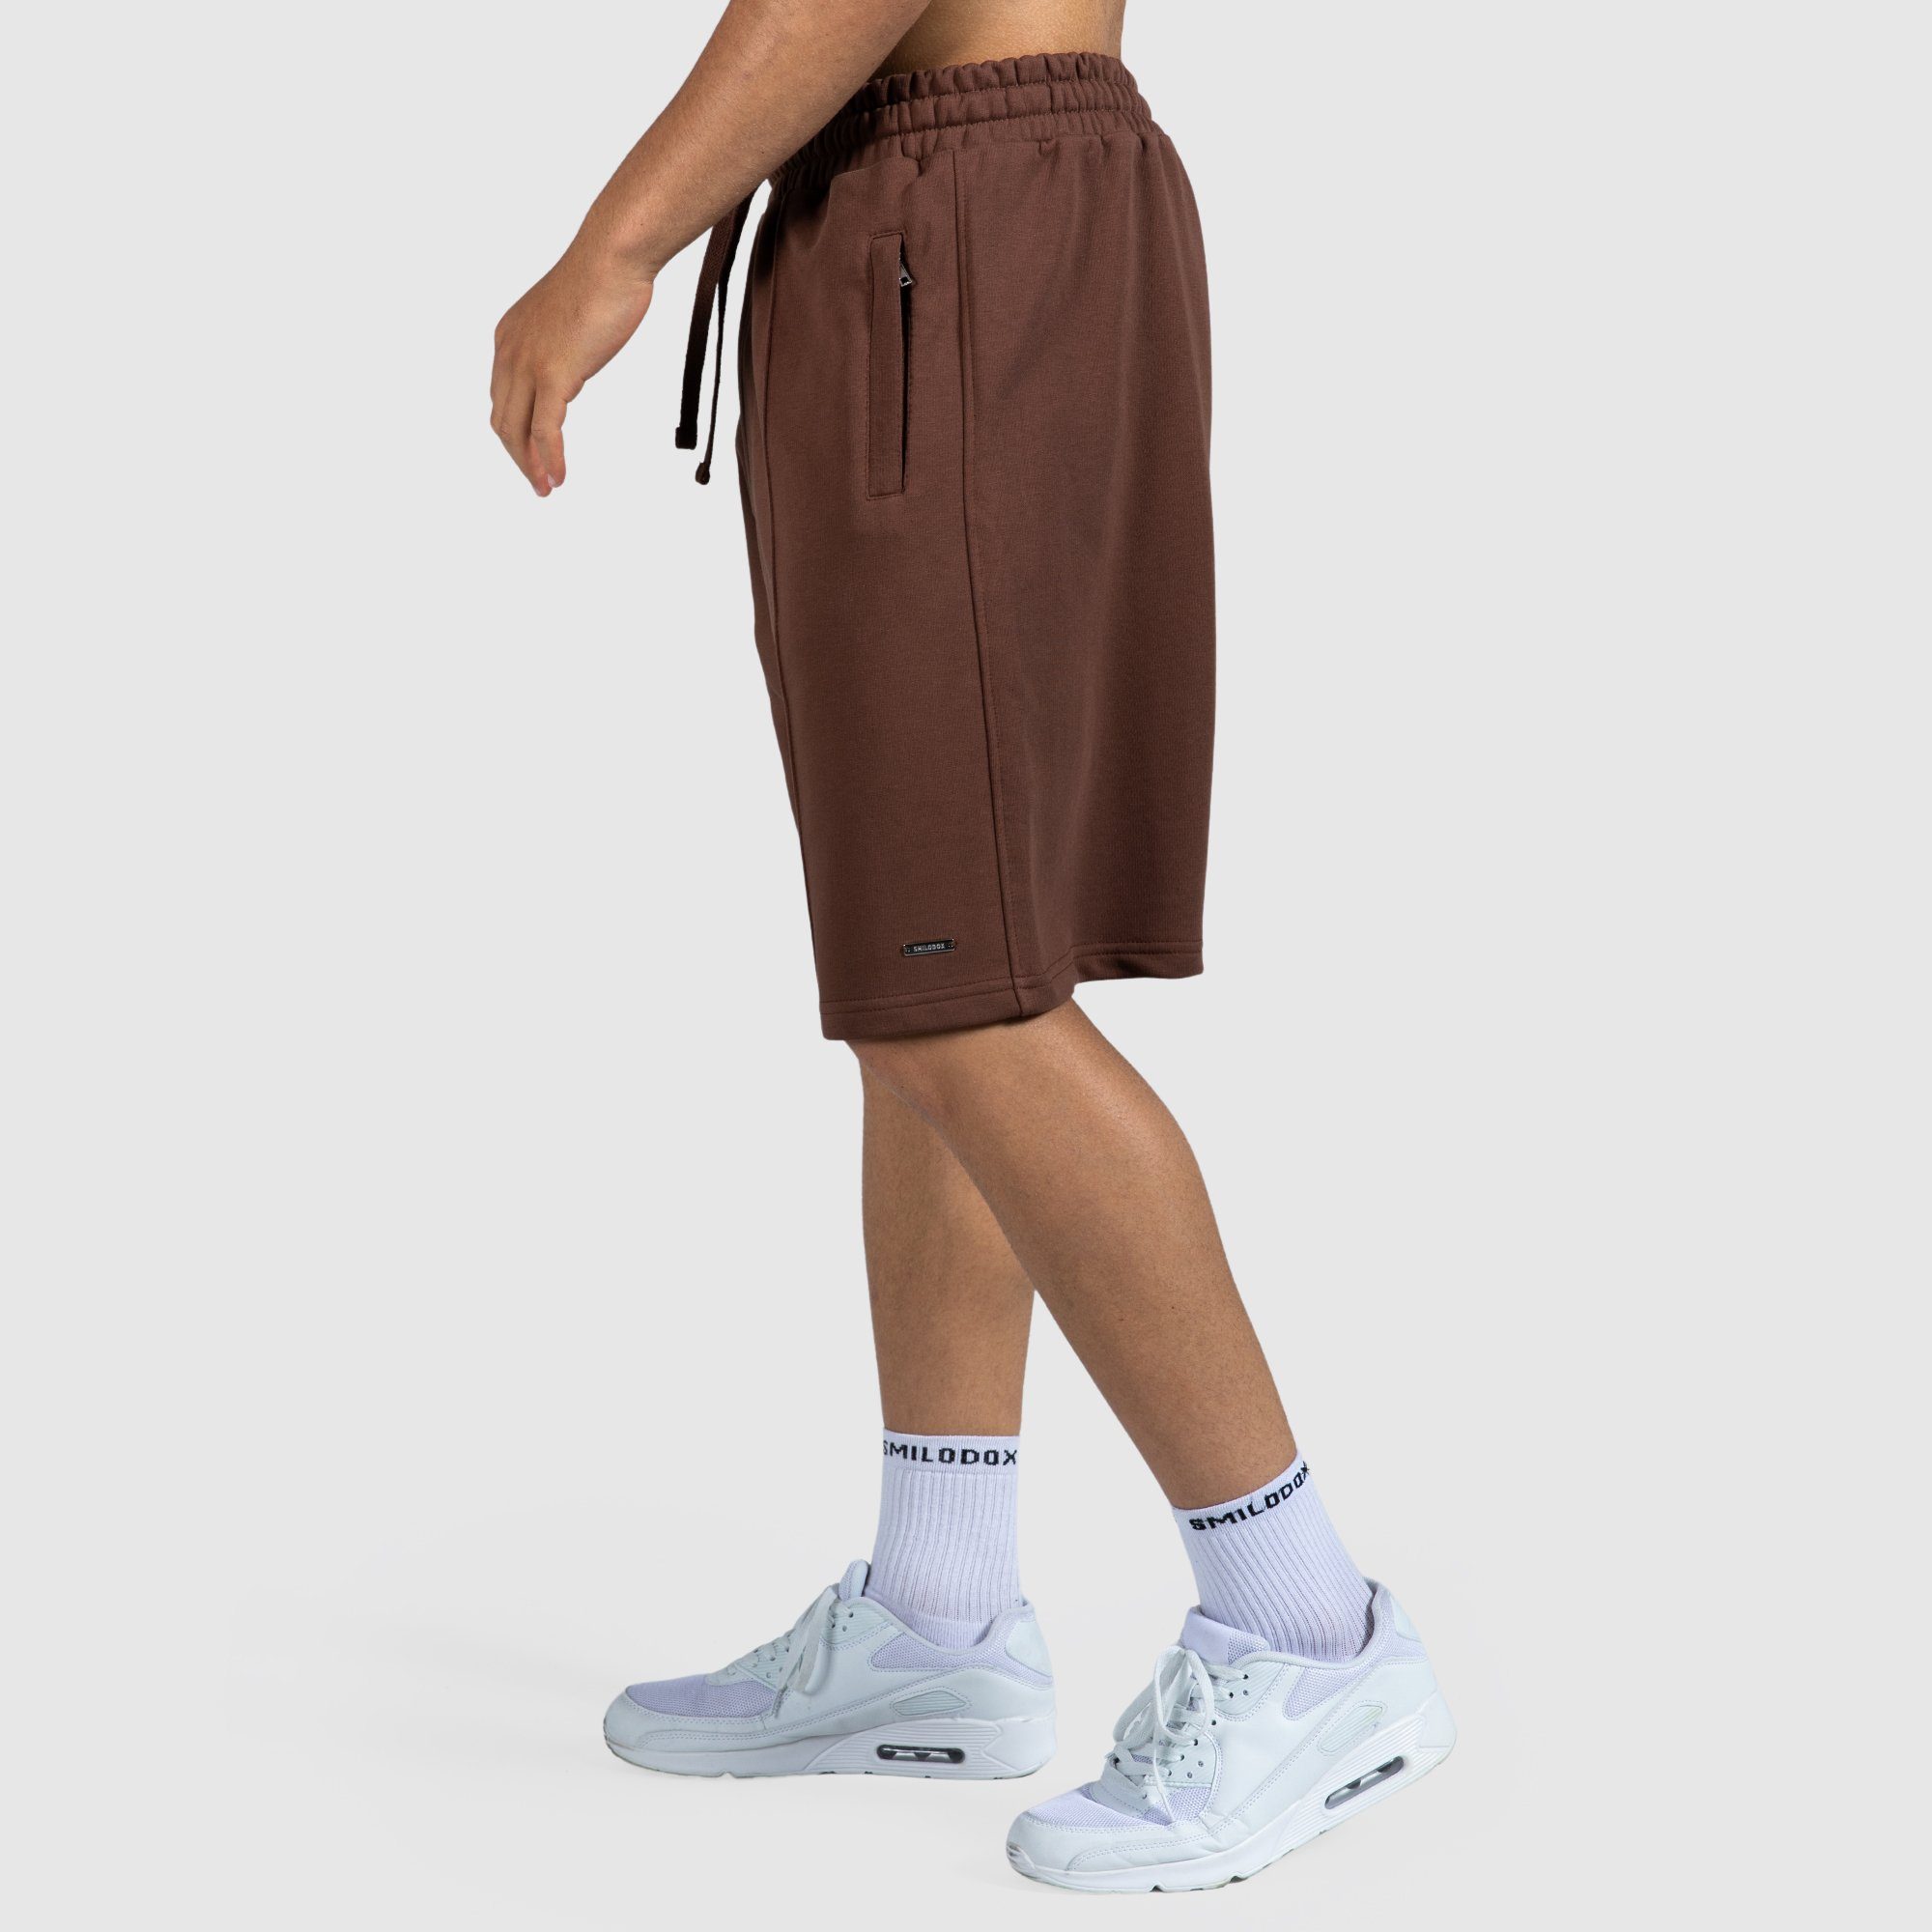 Smilodox Shorts Davin Oversize, Baumwolle 100% Braun